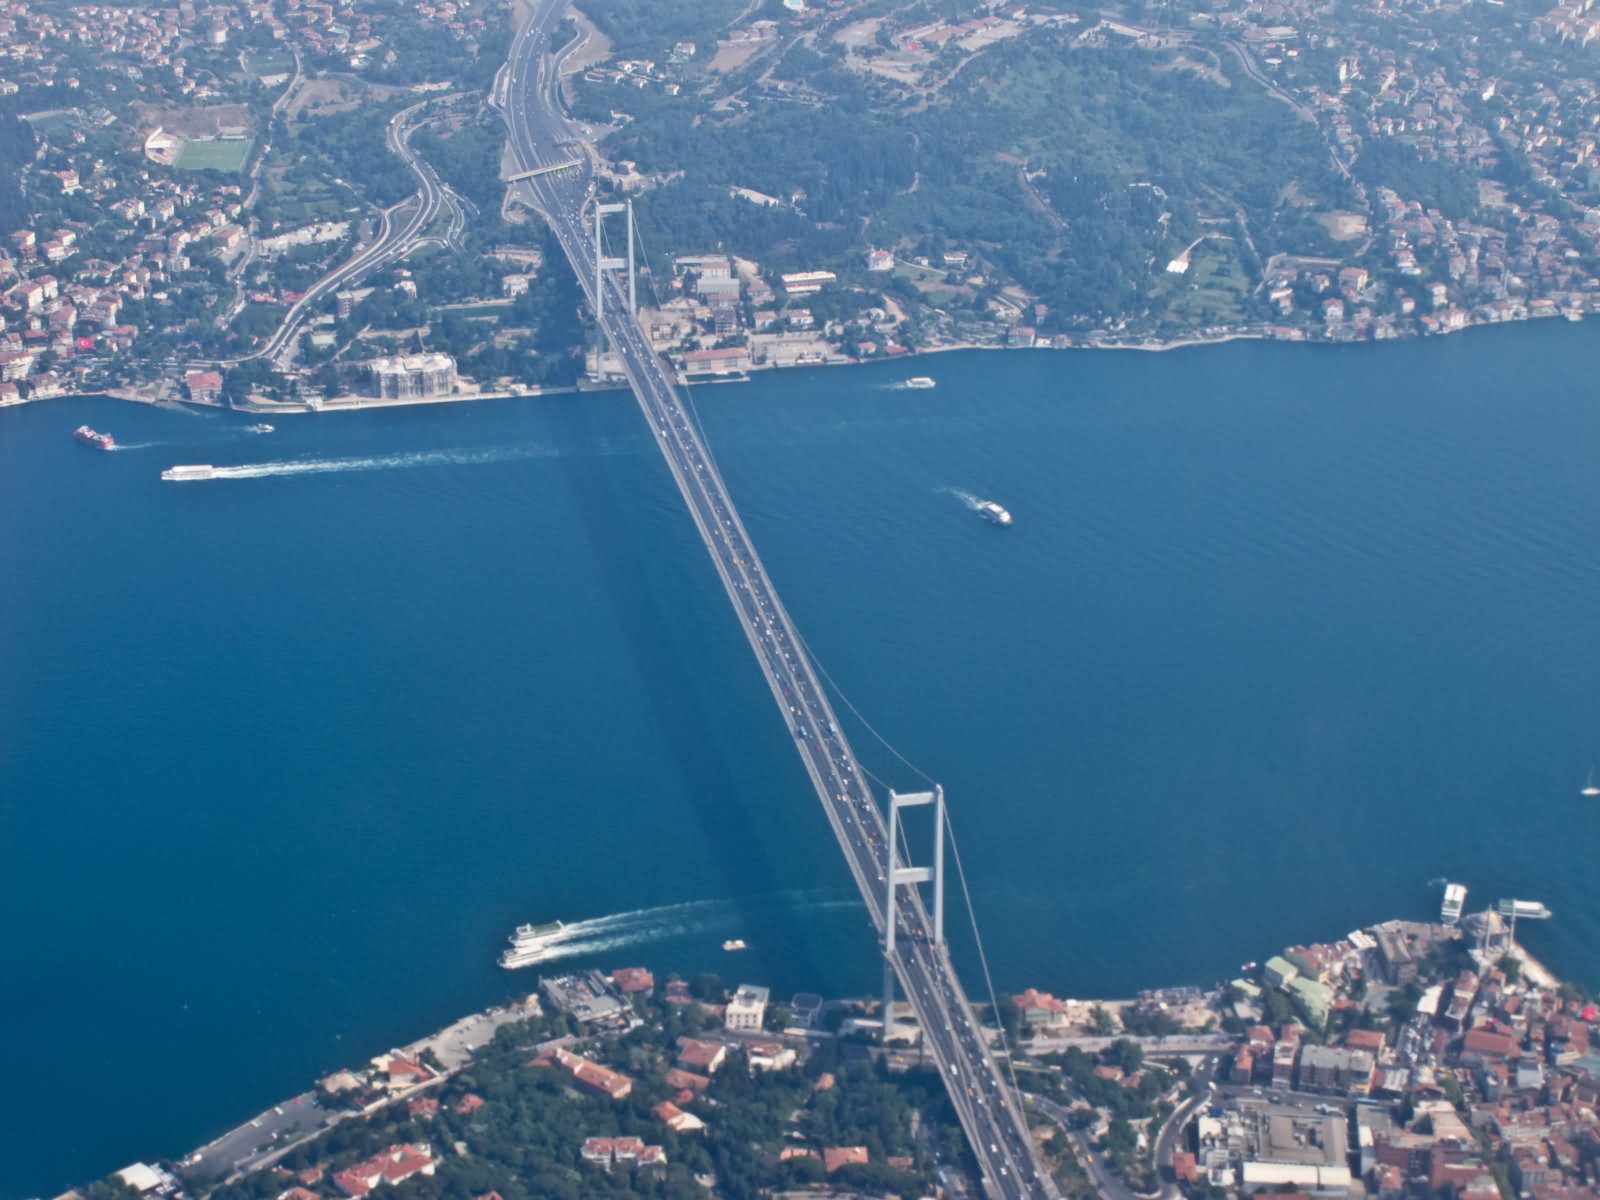 Aerial View Of The Bosphorus Bridge In Istanbul